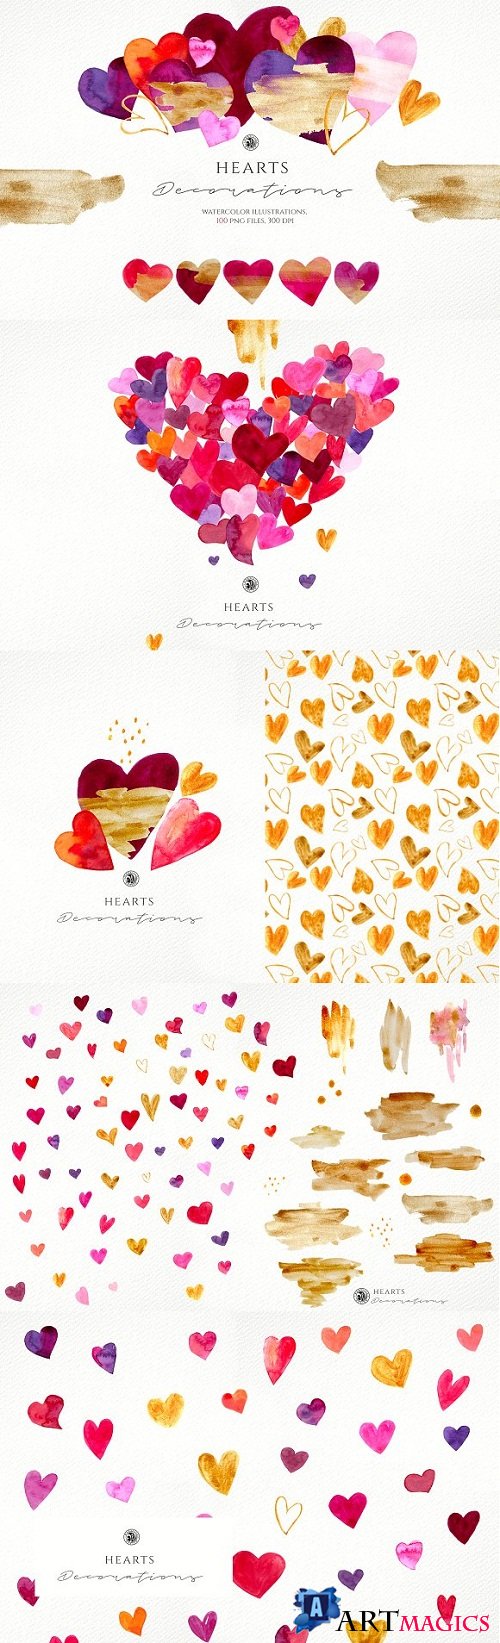 Hearts - watercolor illustrations - 3221567